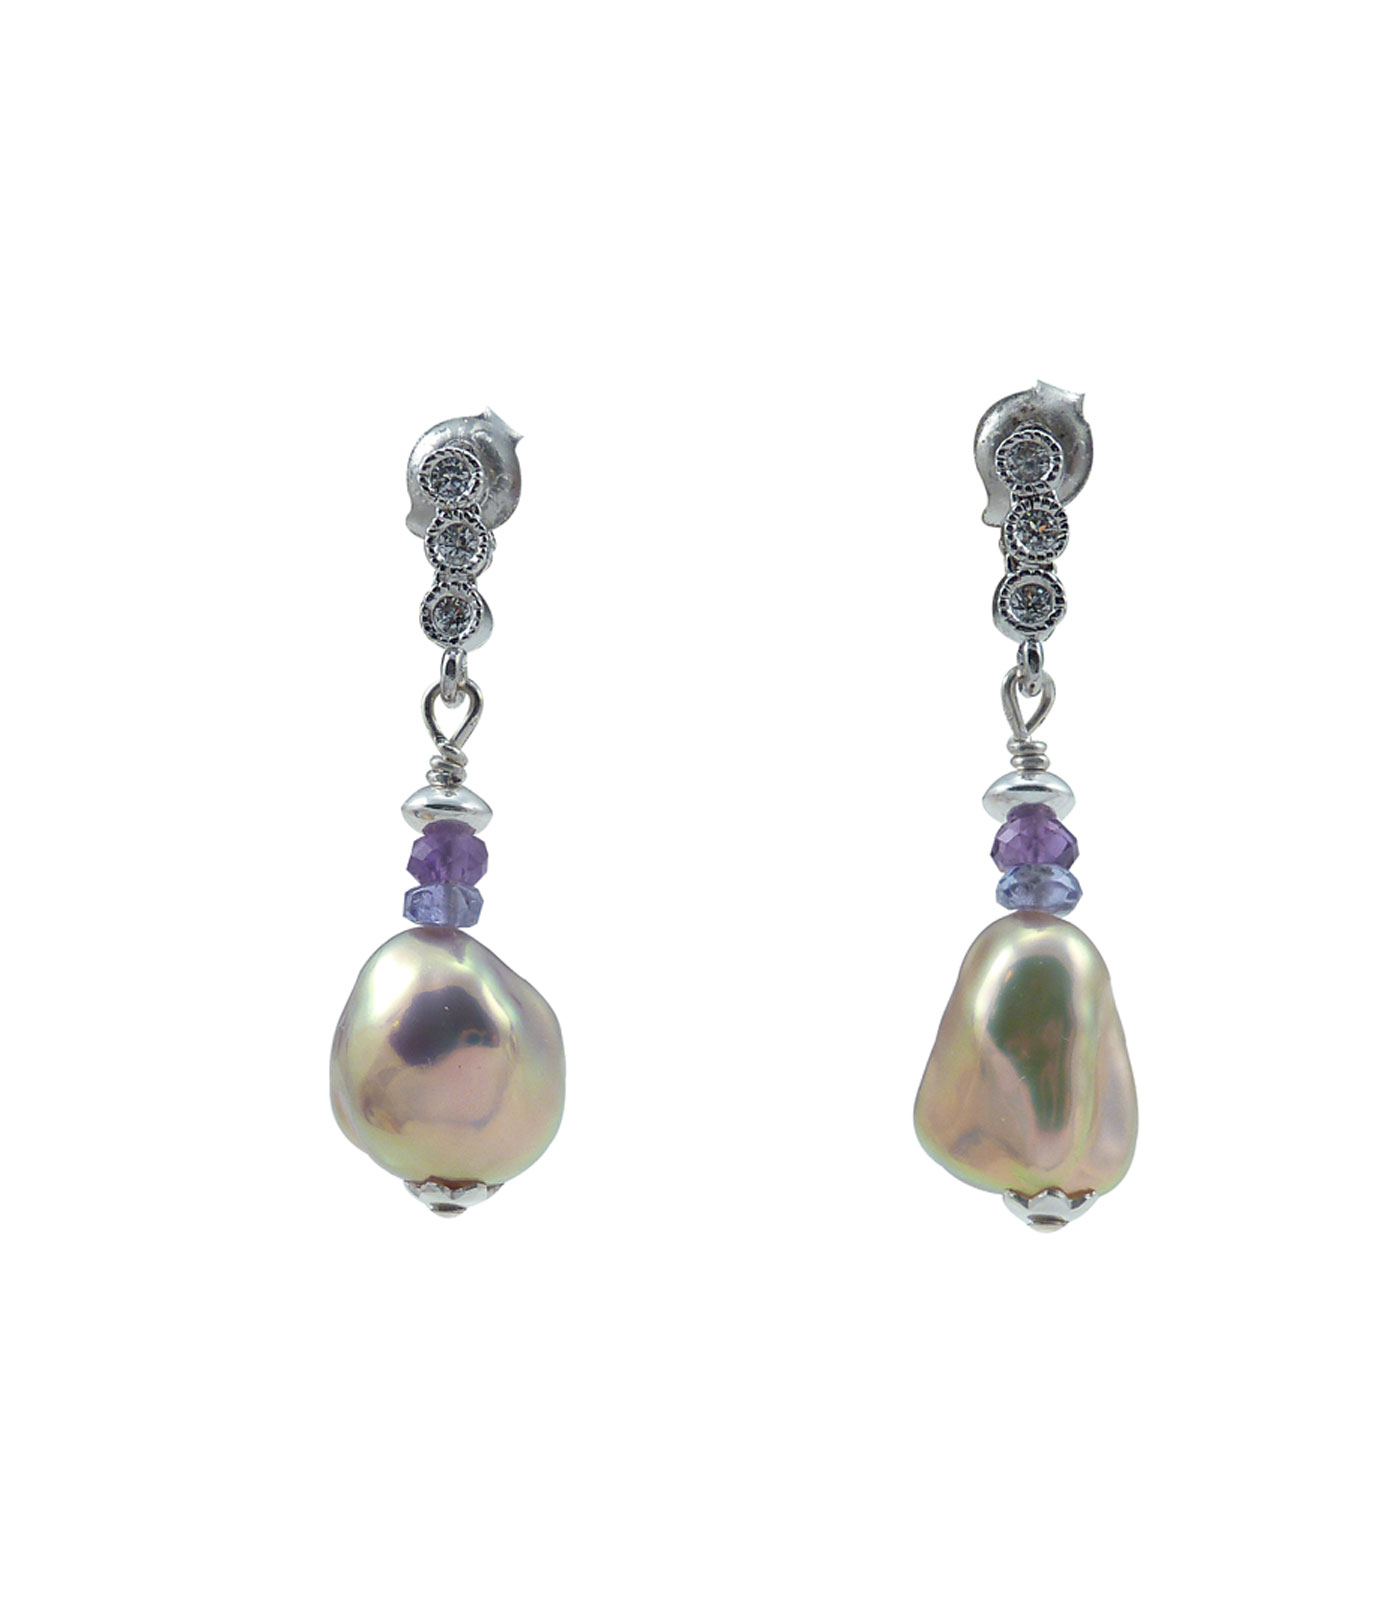 Designer pearl earrings, bronze-pinkish keshi pearls |Pearl Jewelry Expert